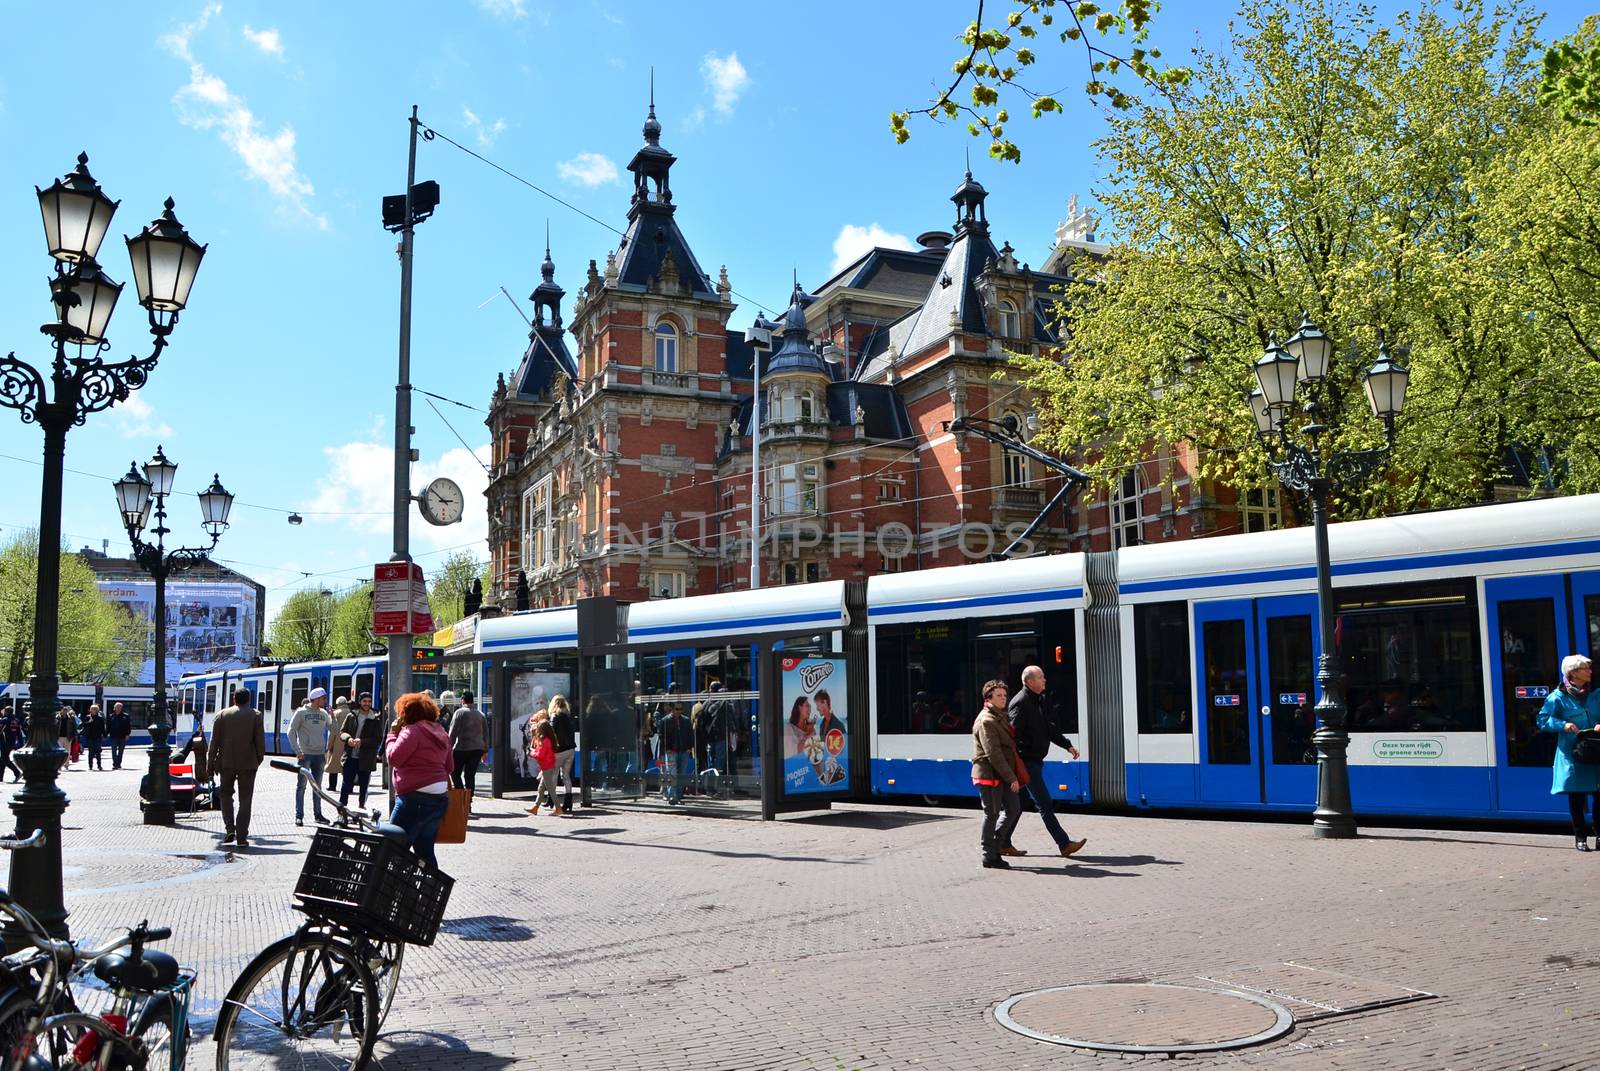 Amsterdam, Netherlands - May 6, 2015: People around Stadsschouwburg building (Municipal theater) at Leidseplein in Amsterdam, Netherlands